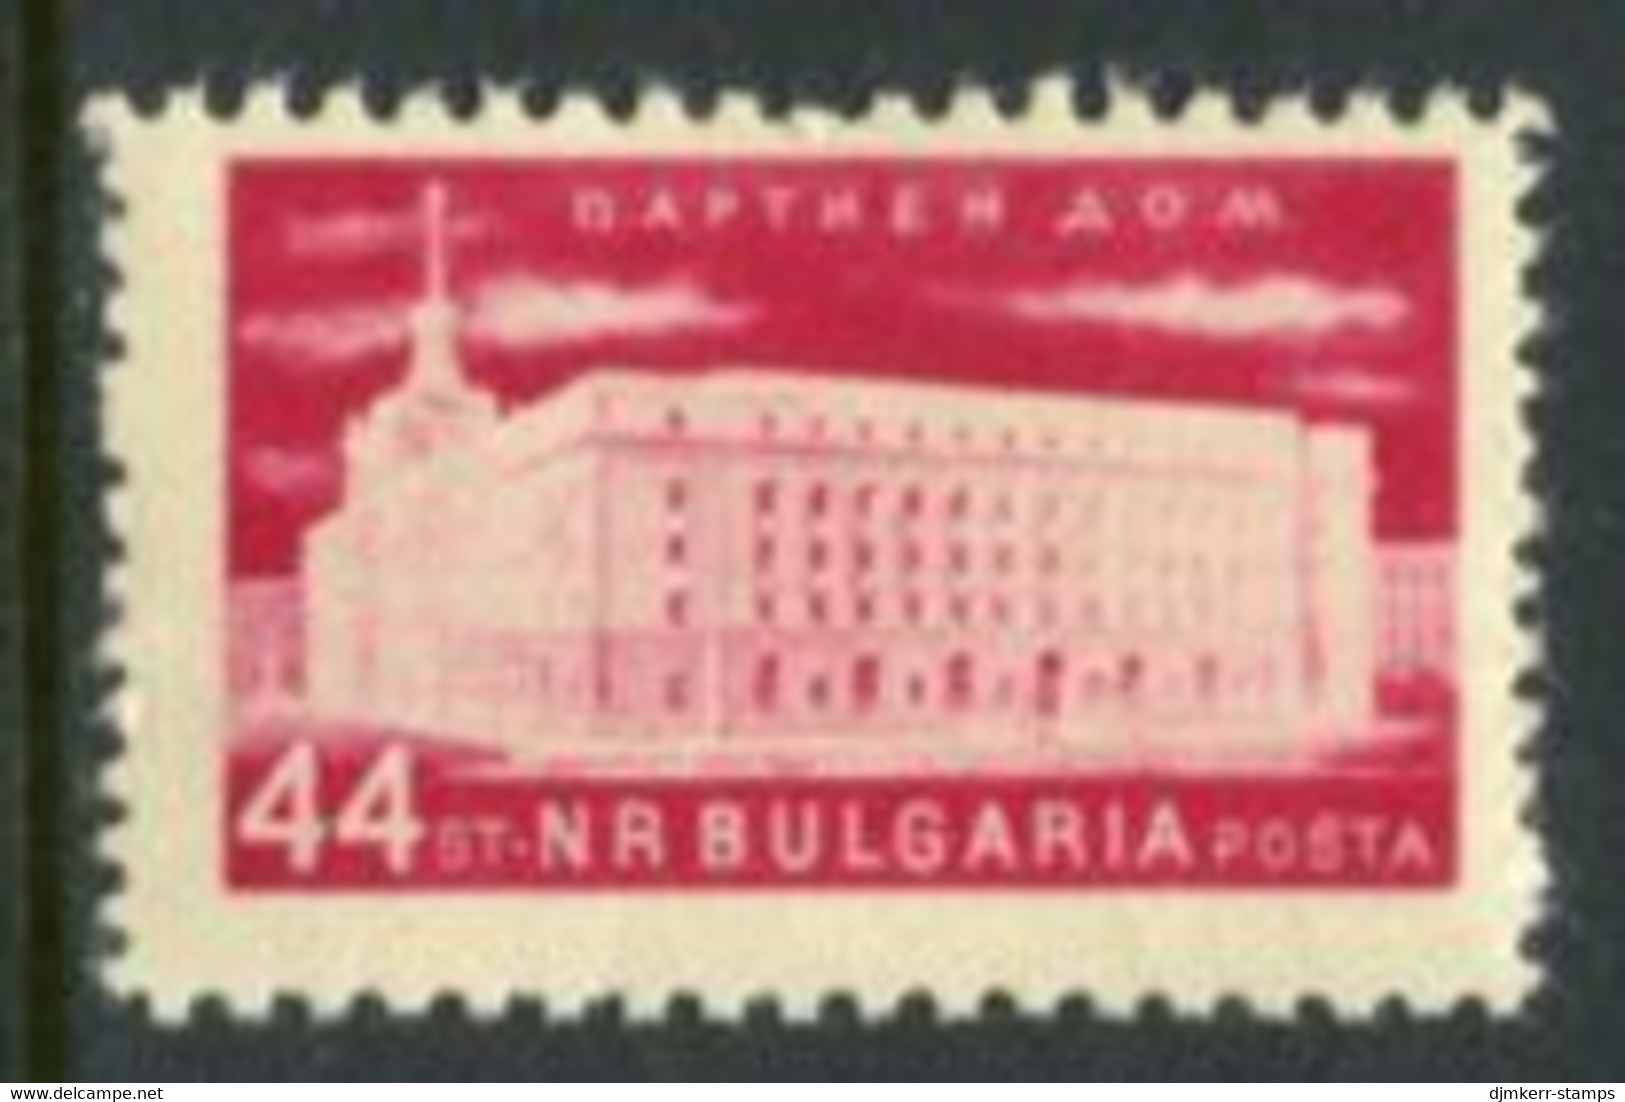 BULGARIA 1956  Industry 44 St. Change Of Colour MNH / **.  Michel 989 - Ungebraucht